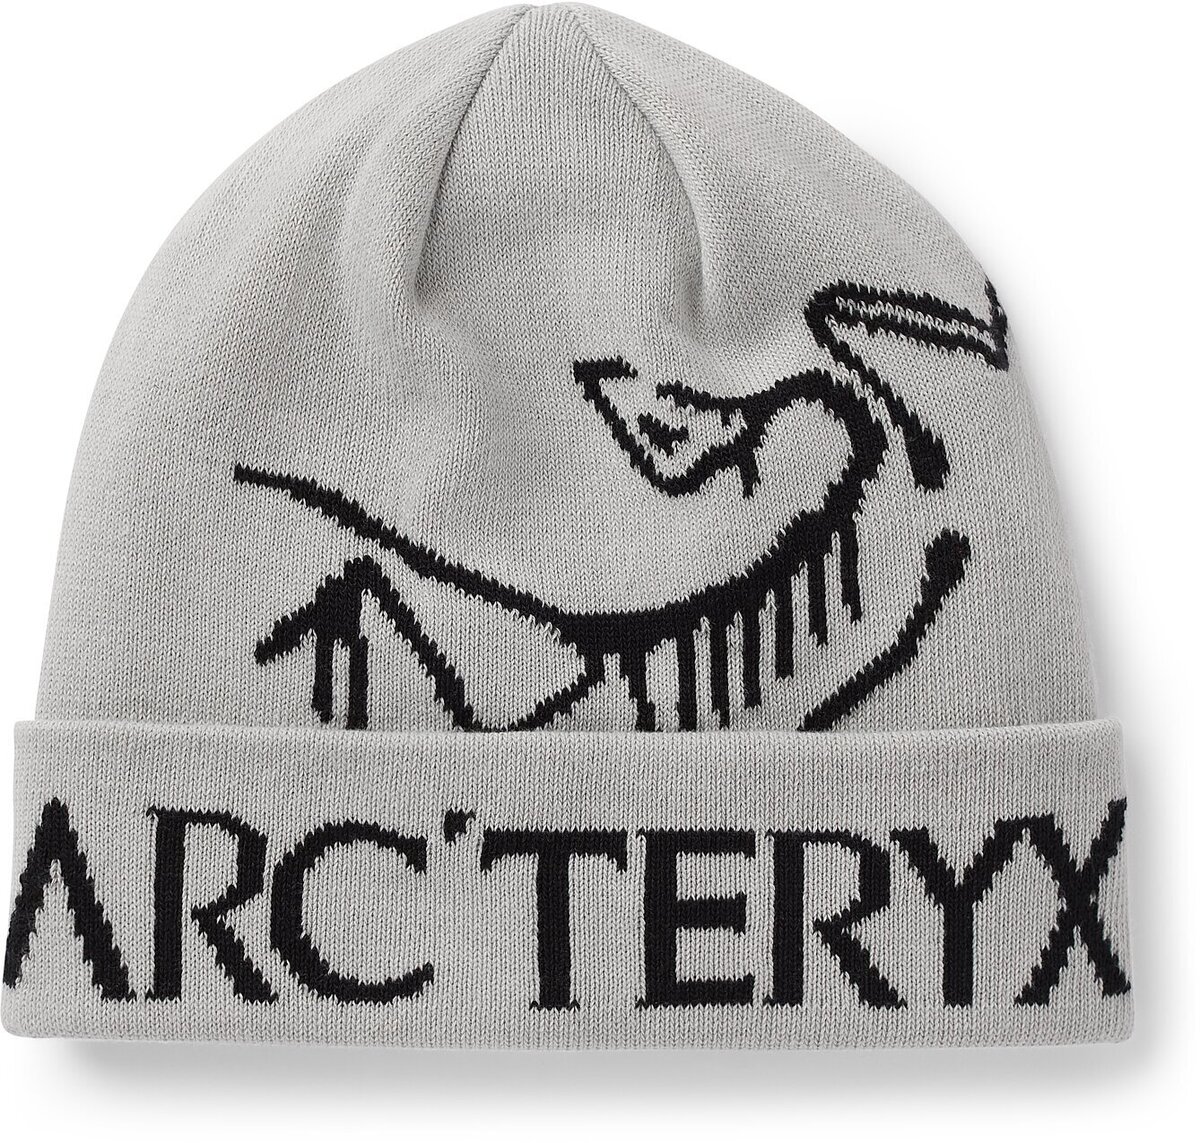 Arcteryx Word Toque – acheter maintenant chez ASPHALTGOLD !